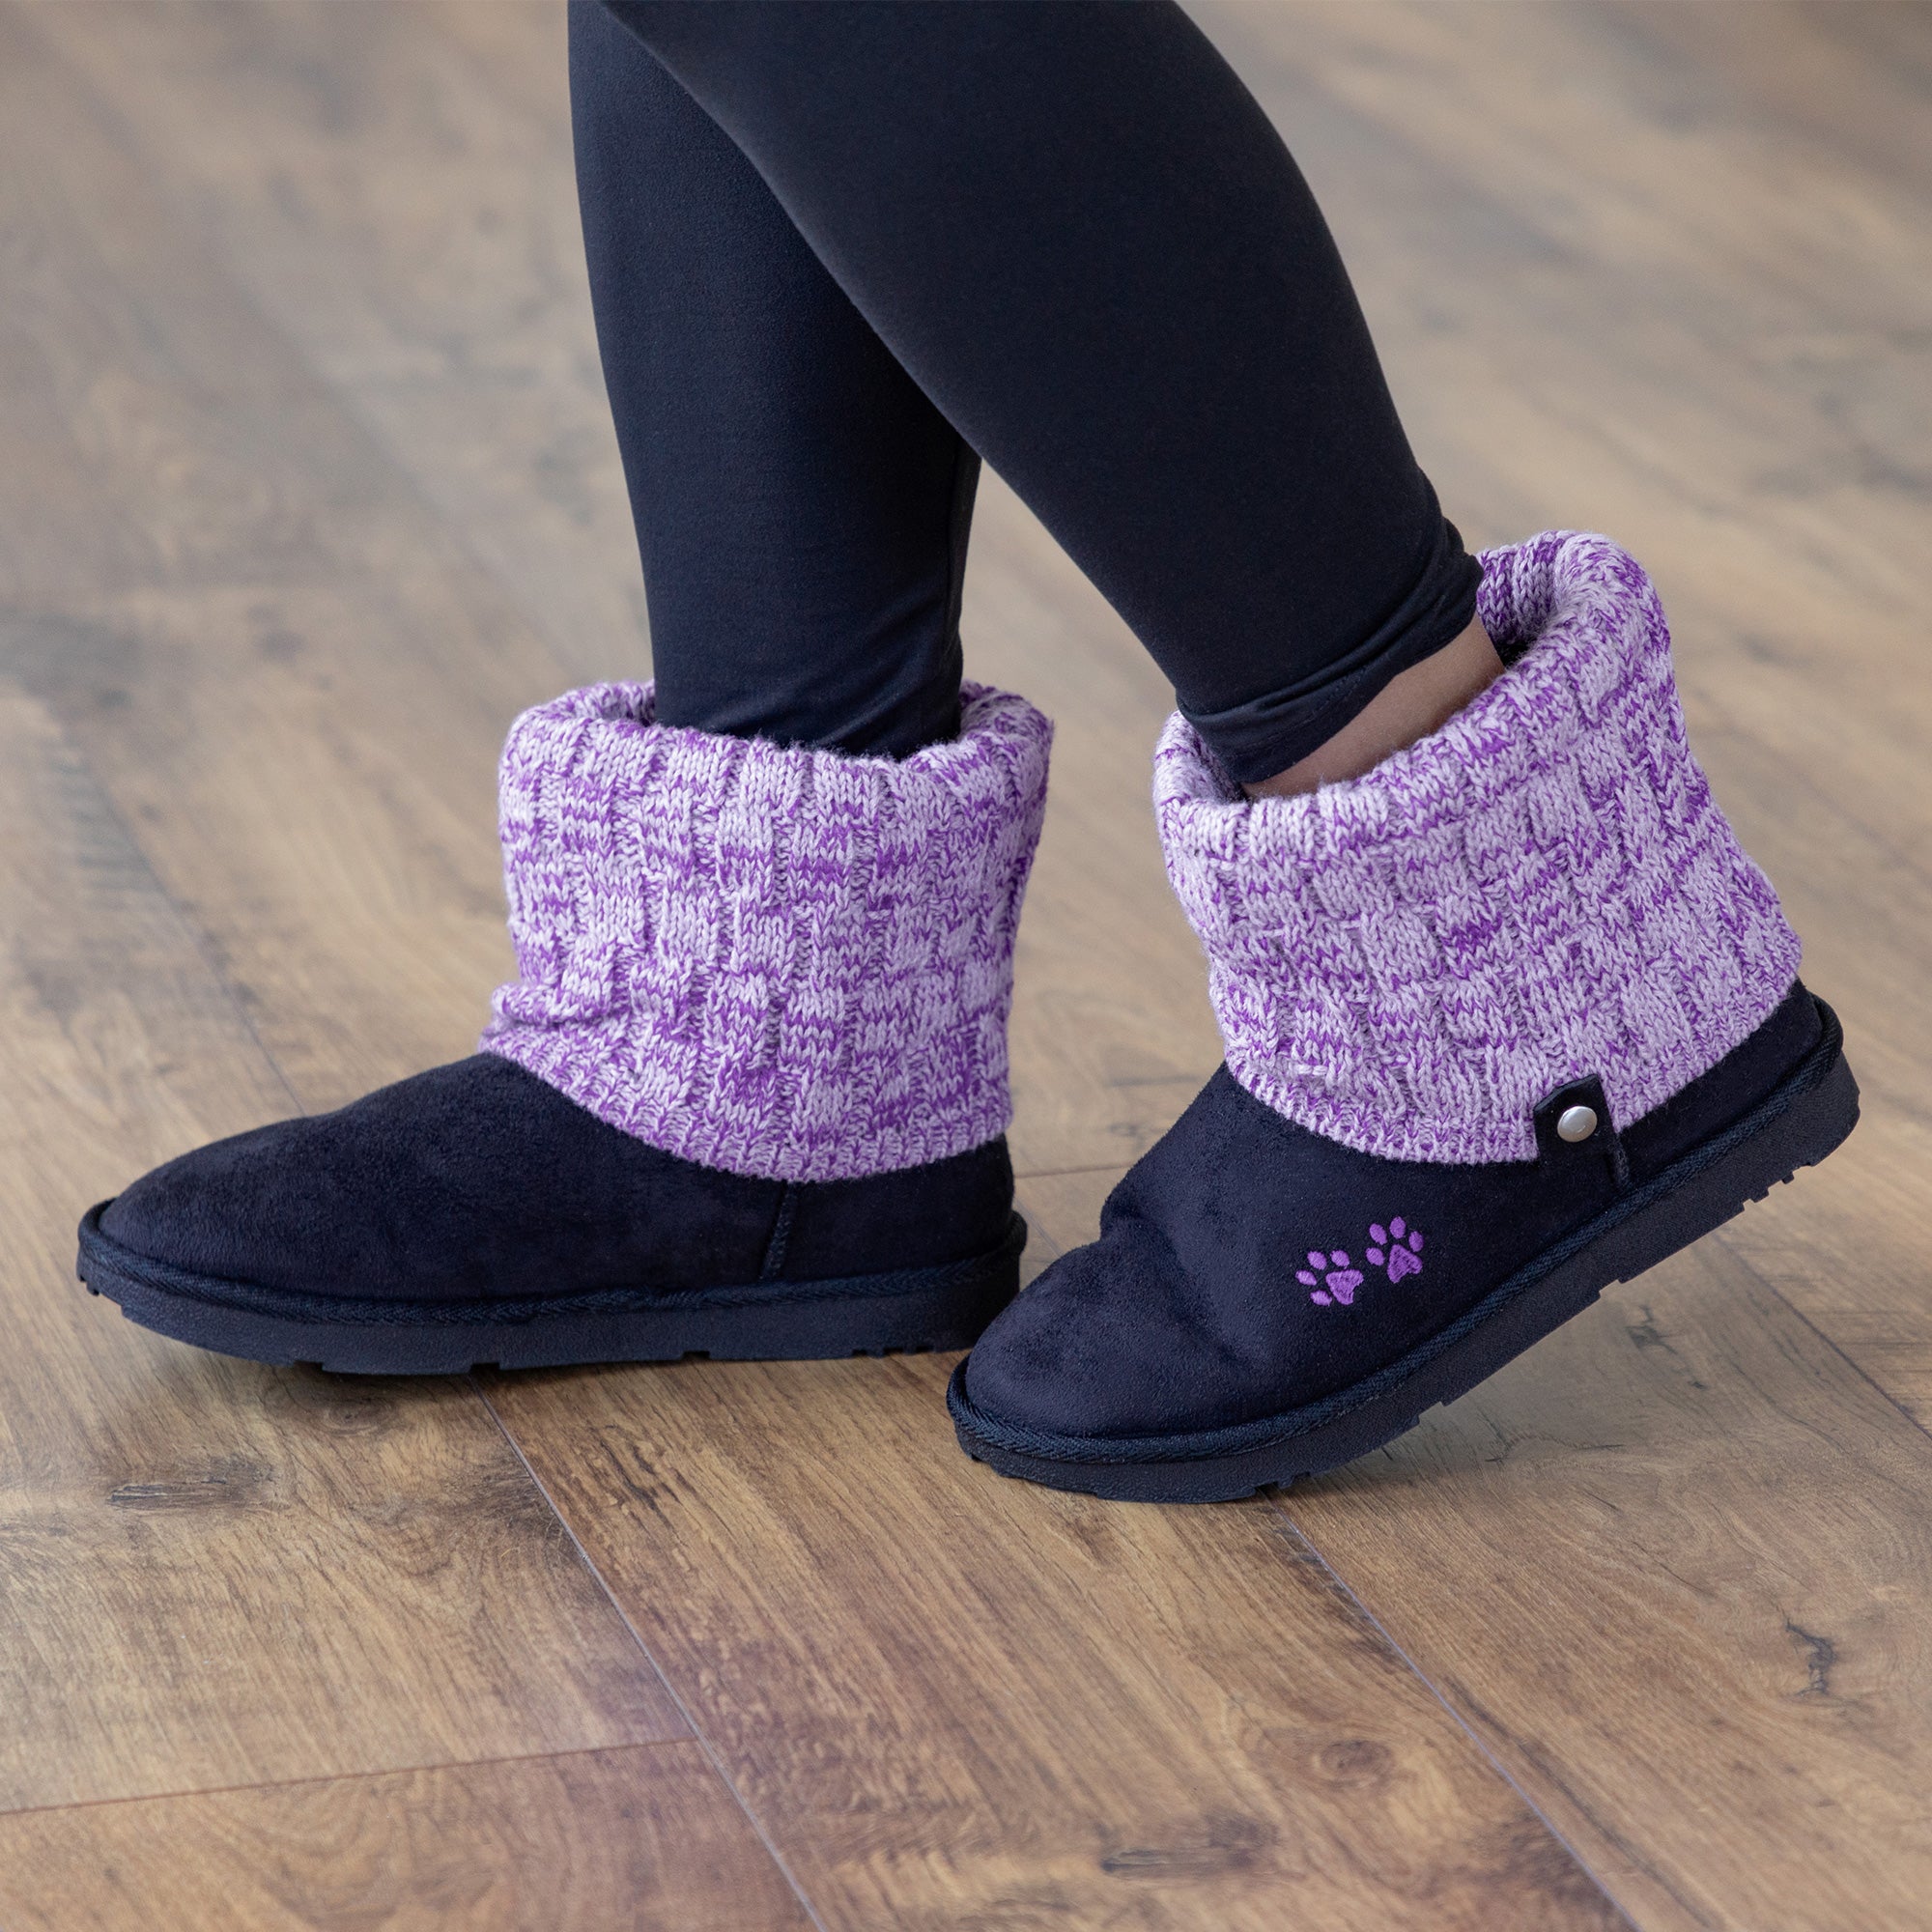 Paw Print Knit Ankle Boots - Black/Purple - 8